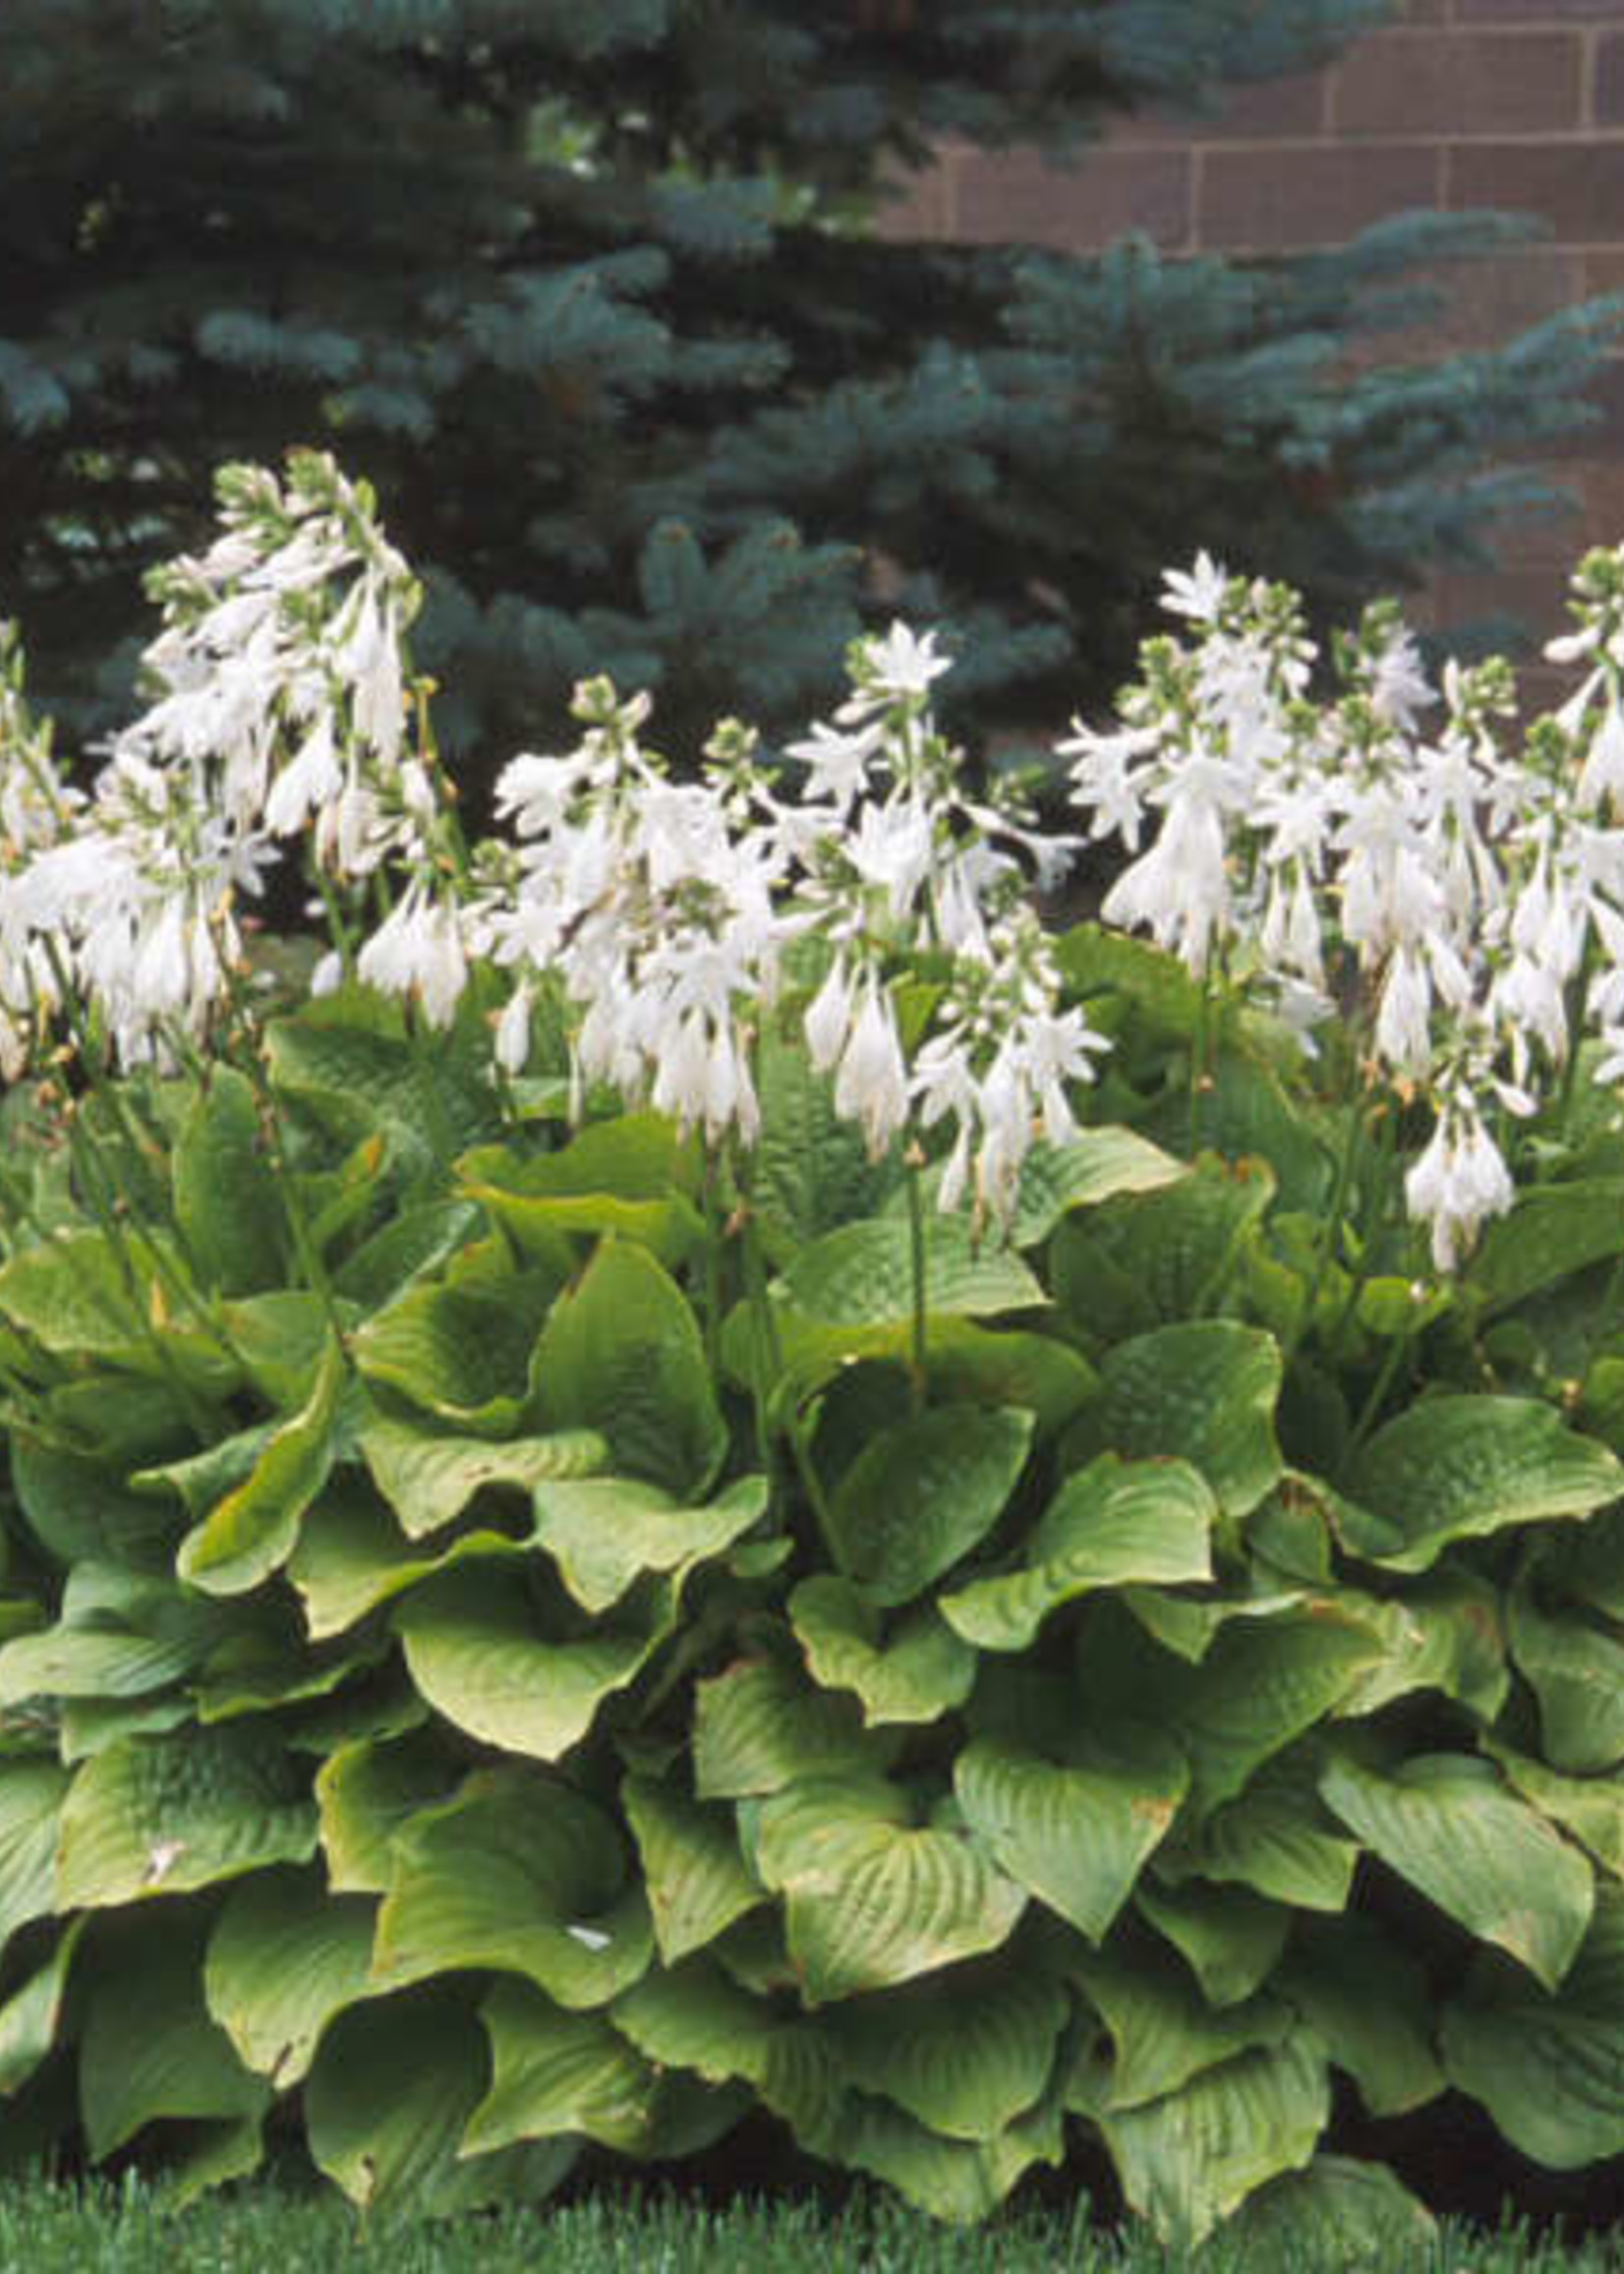 Hosta Royal Standard Plantain Lily, Royal Standard, #1